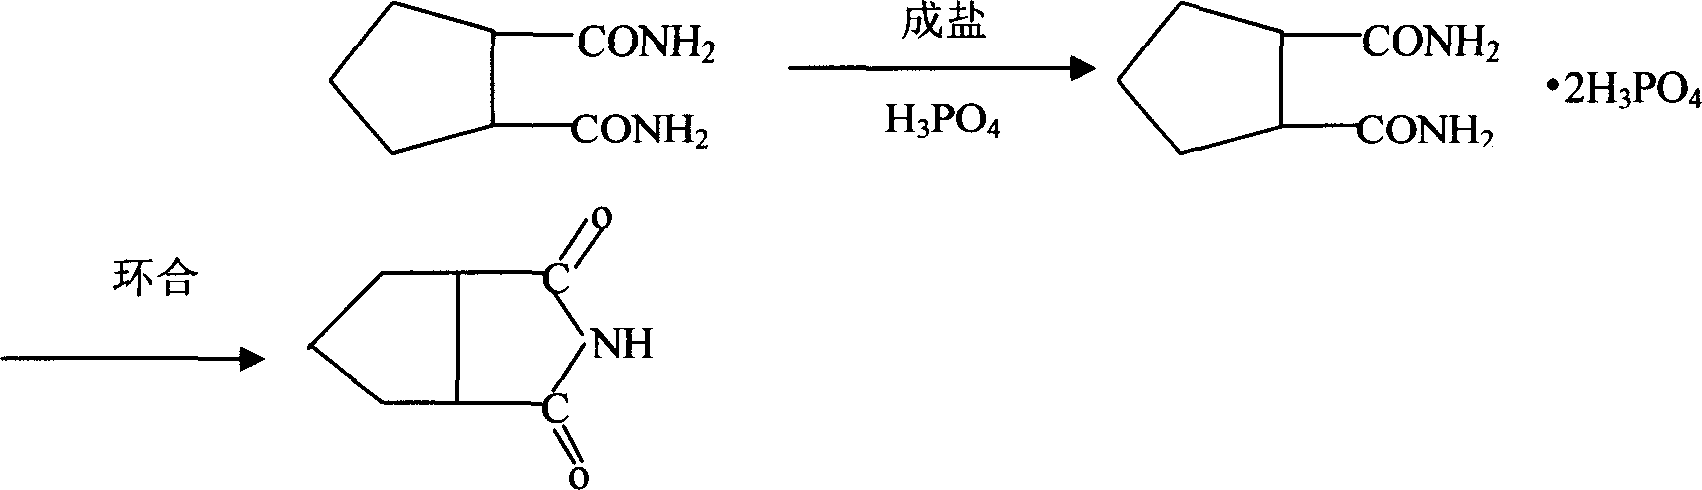 Cyclopentane1,2-diimide preparation method